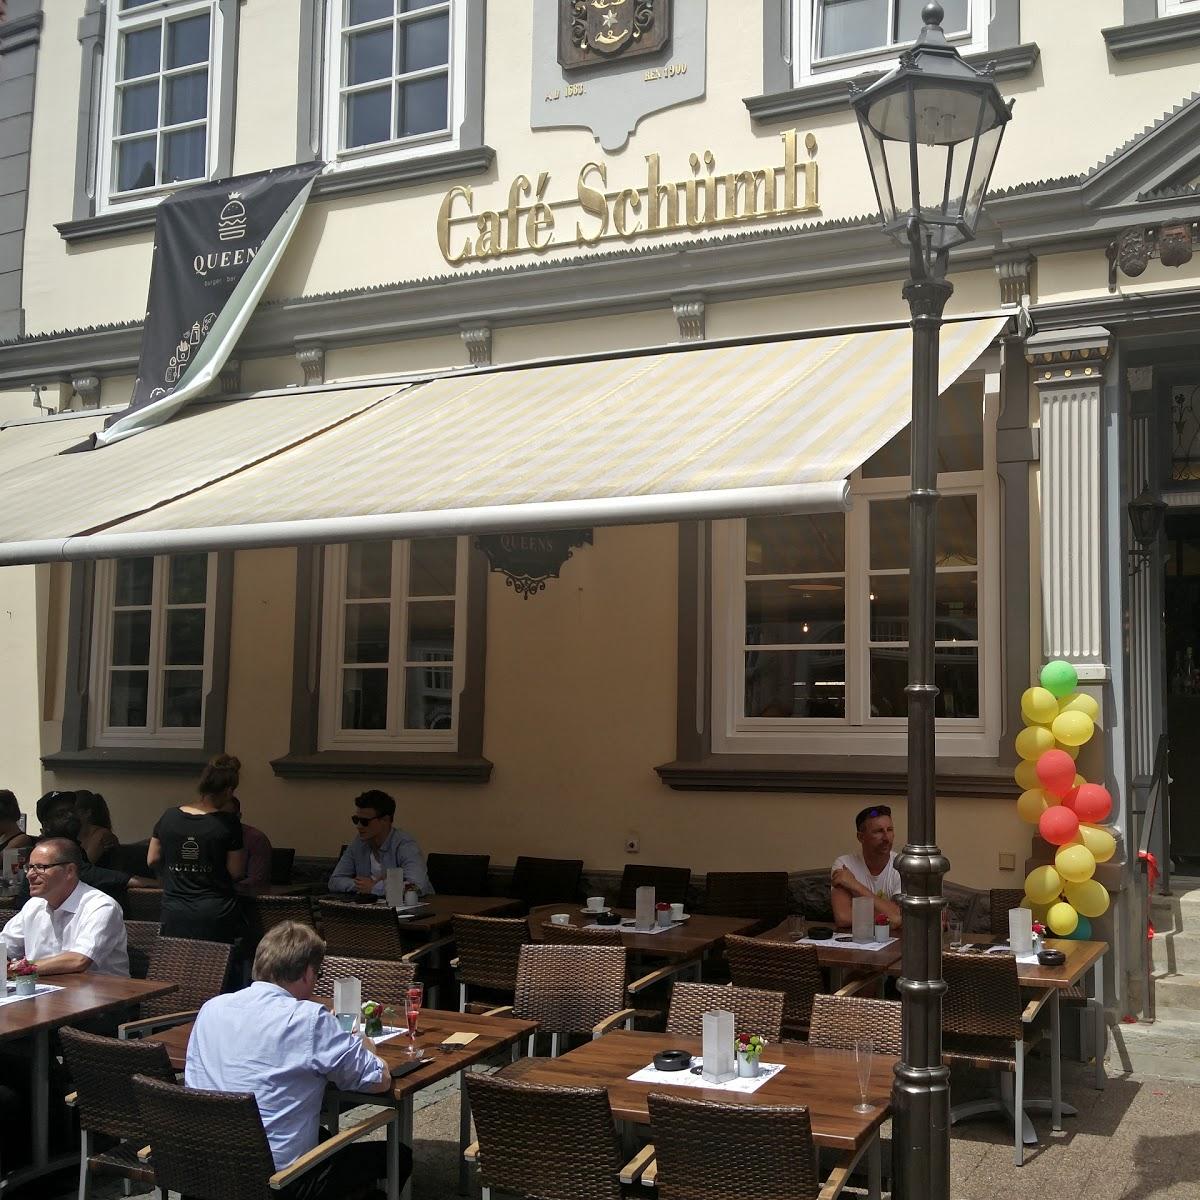 Restaurant "Genusscelle" in  Celle